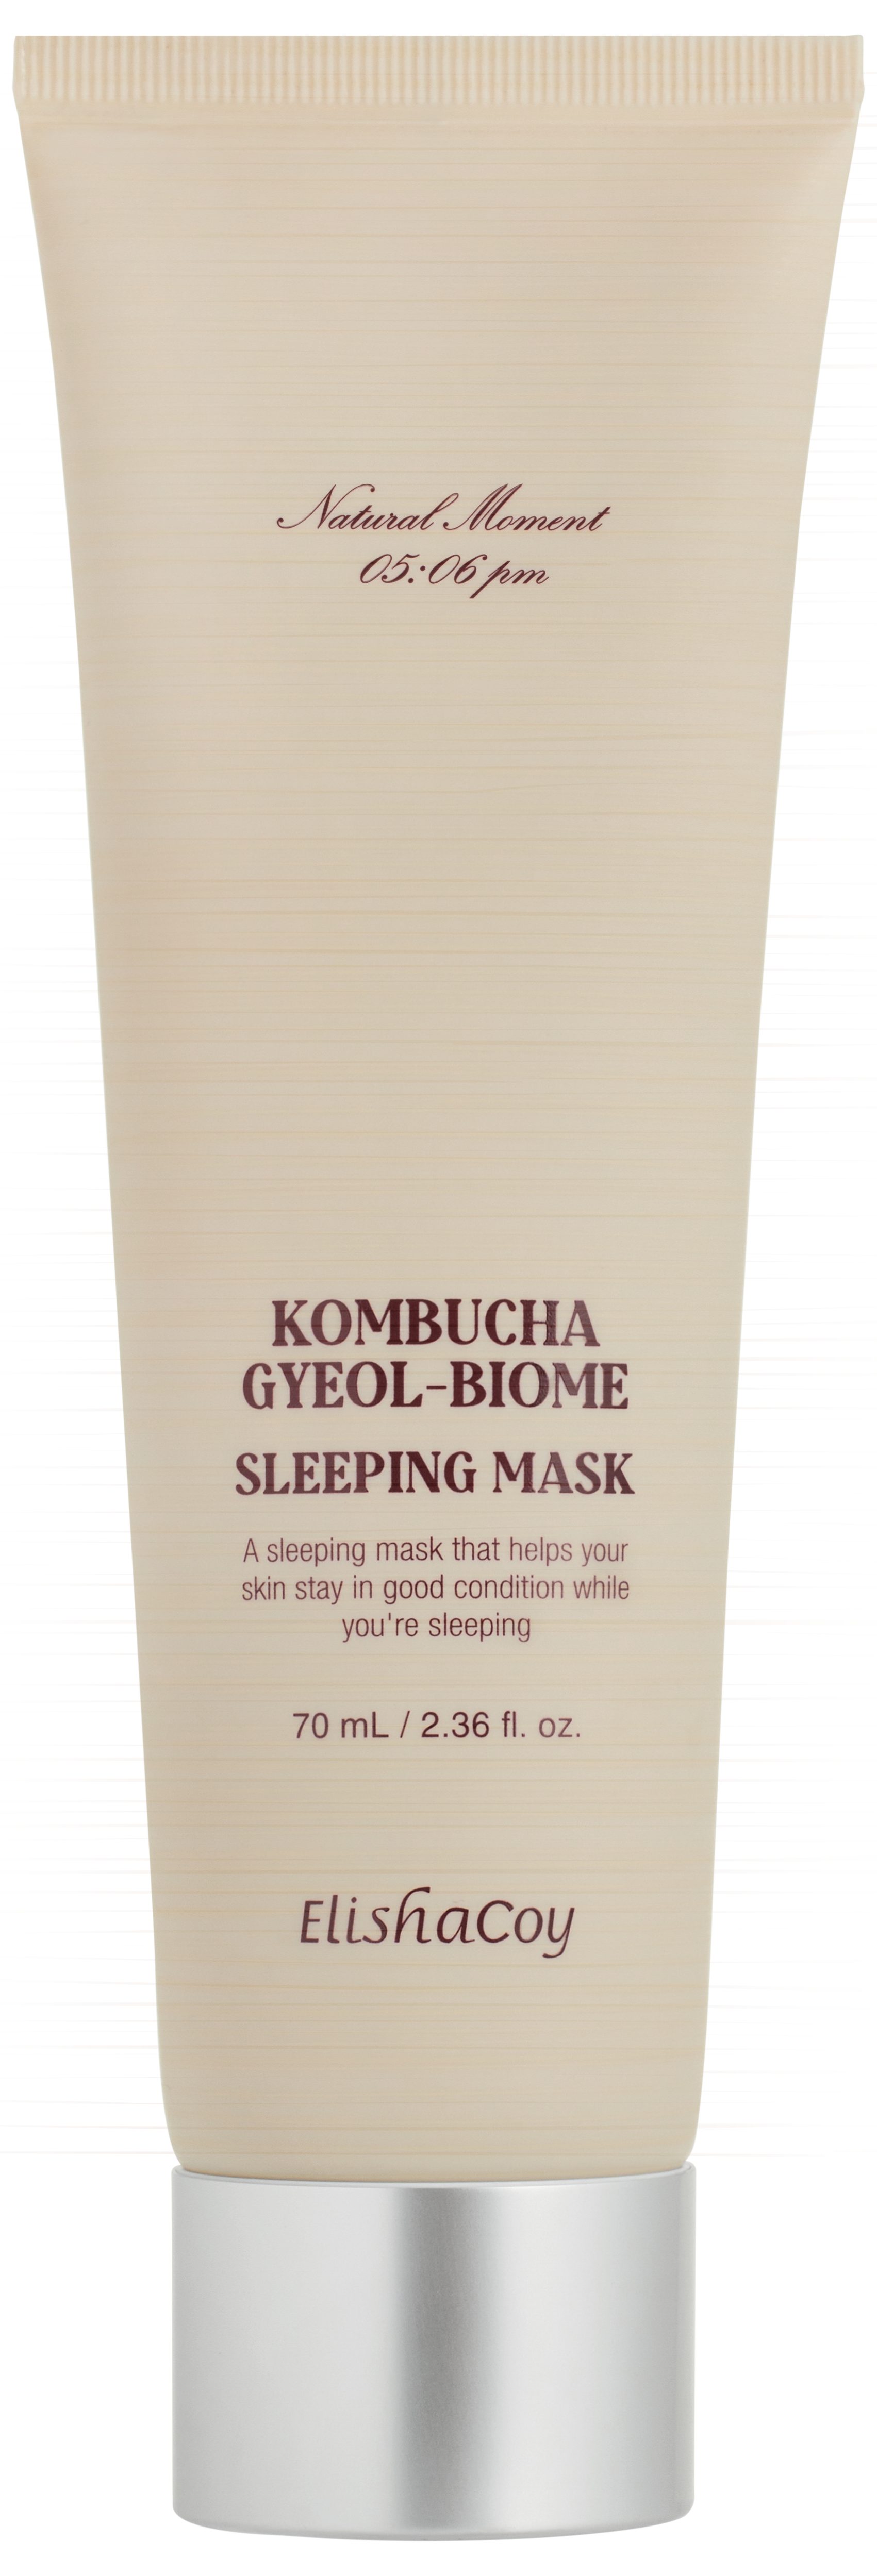 ElishaCoy Gesichtsmaske ElishaCoy KOMBUCHA GYEOL-BIOME Sleeping Mask 70 ml | Gesichtsmasken